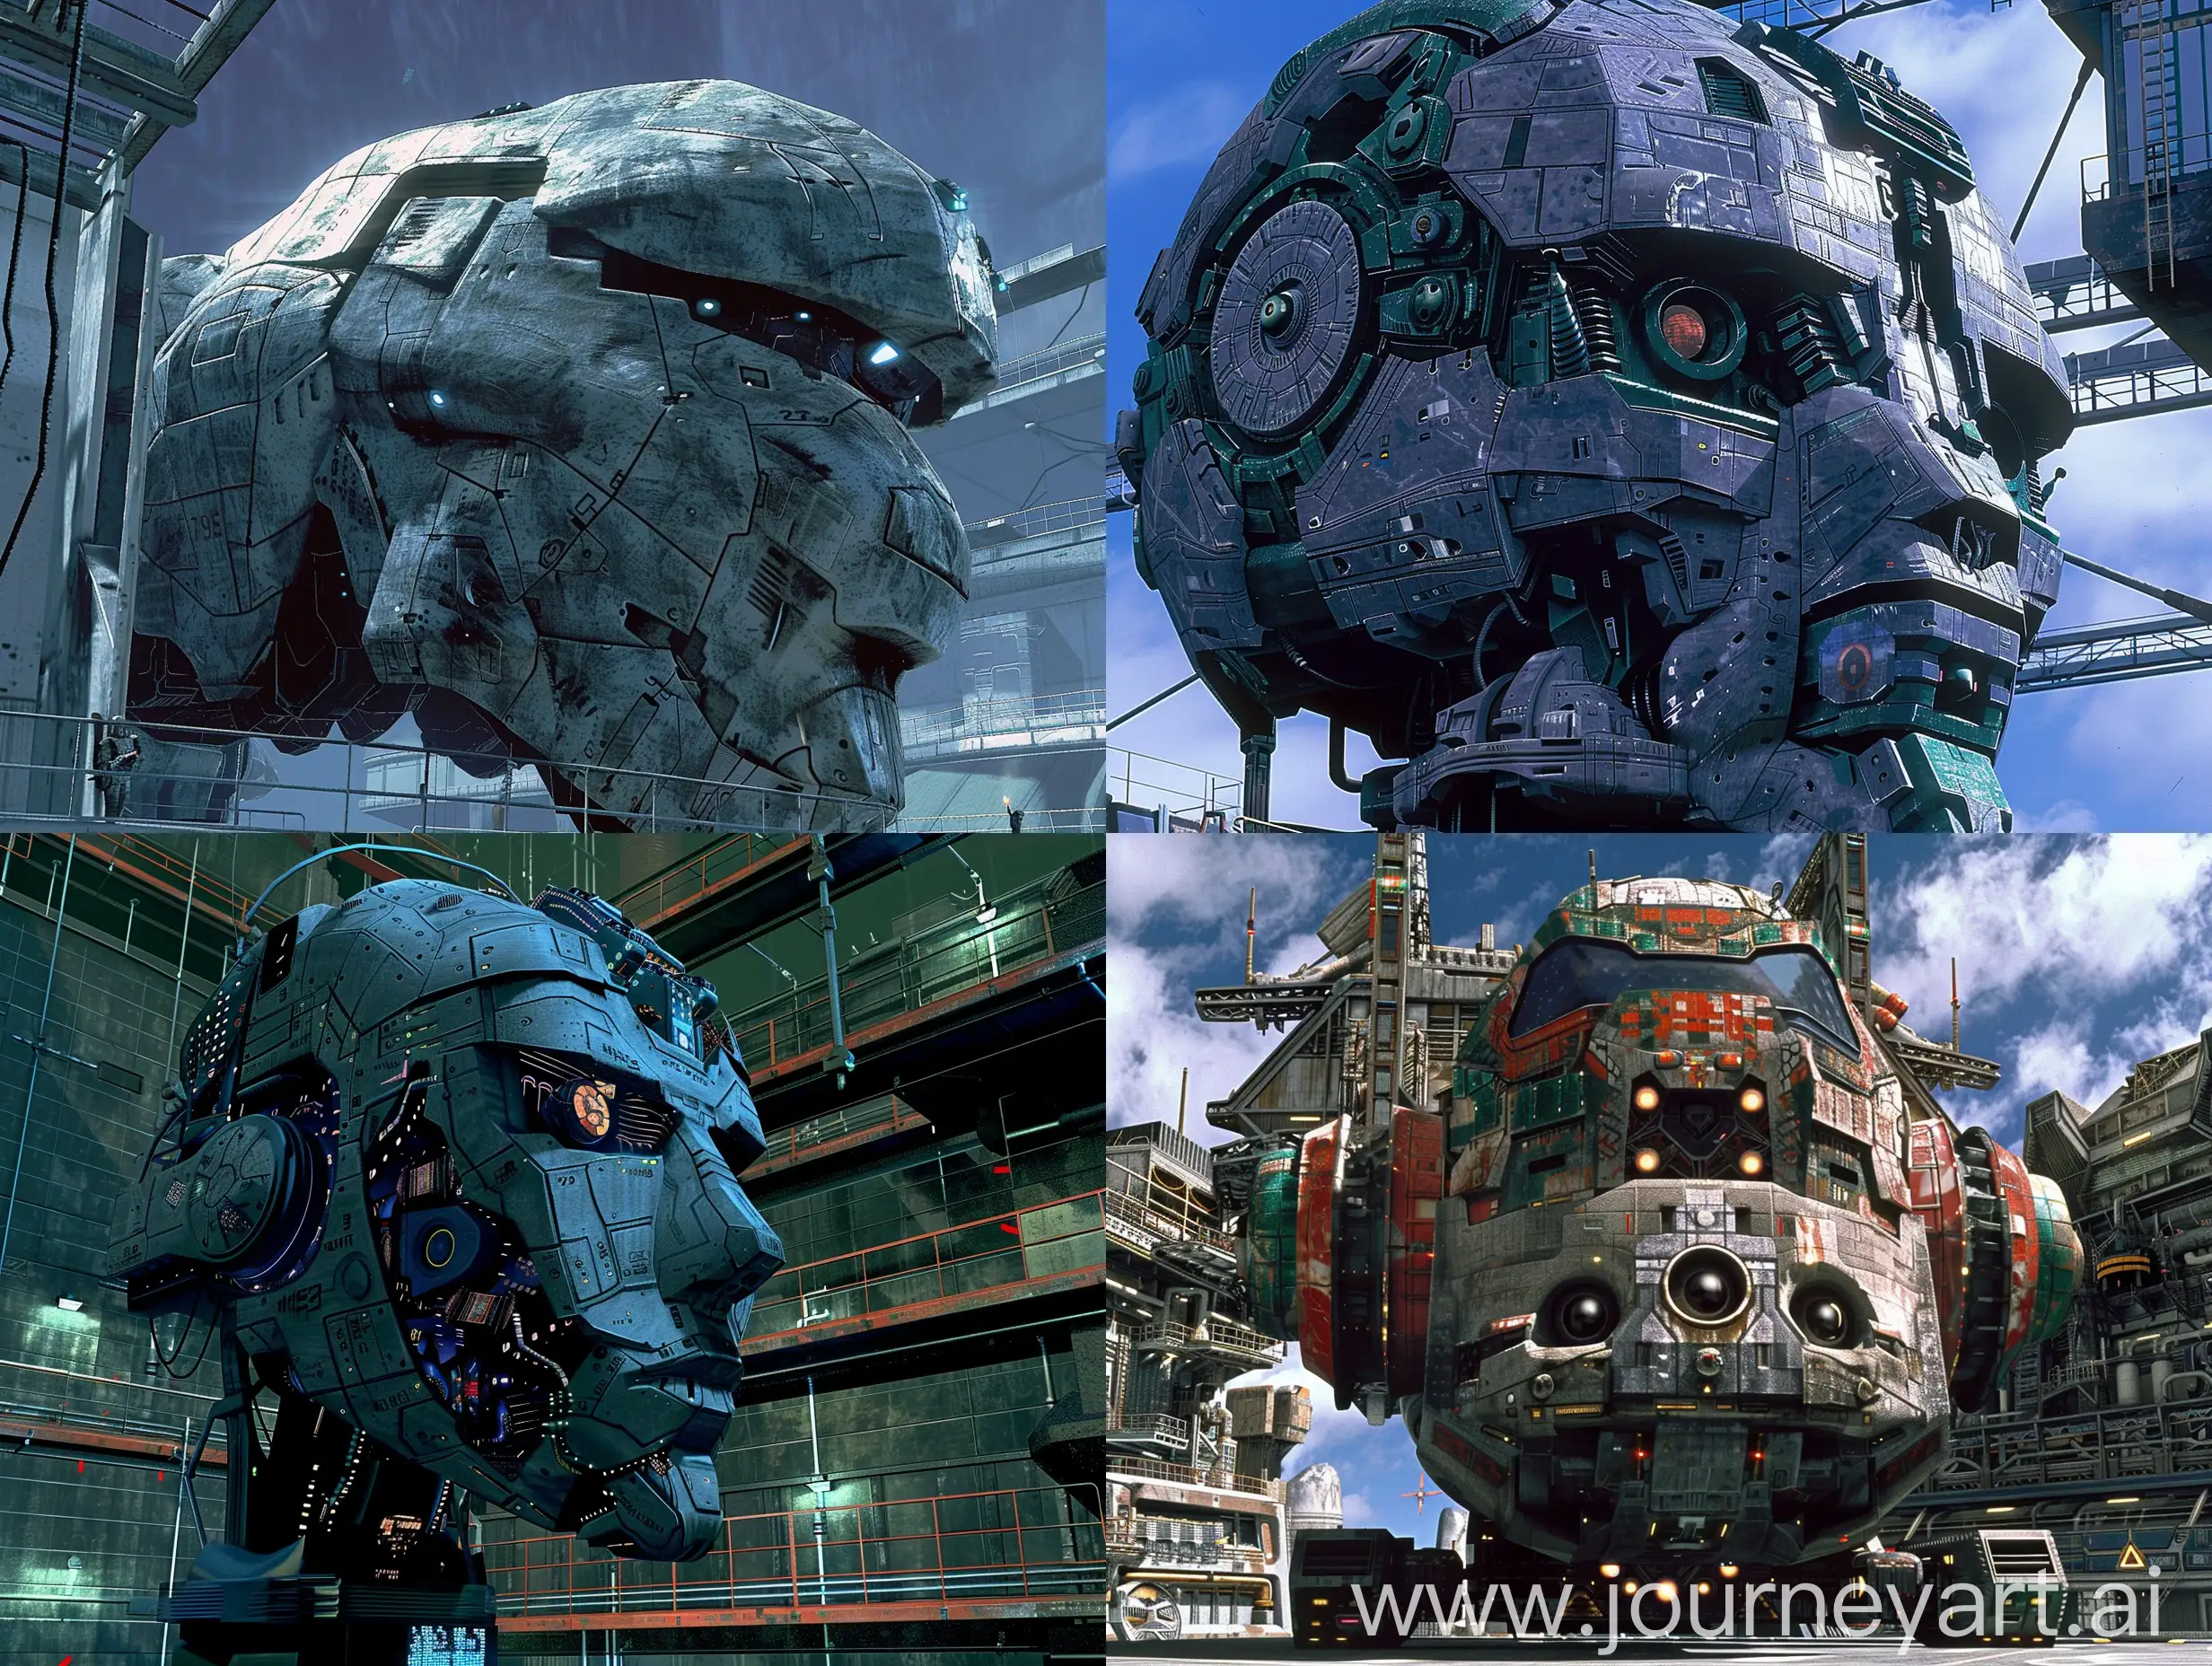 Giant-Robot-Head-in-Retro-PS2-Game-Graphics-Nostalgic-Futurism-Trend